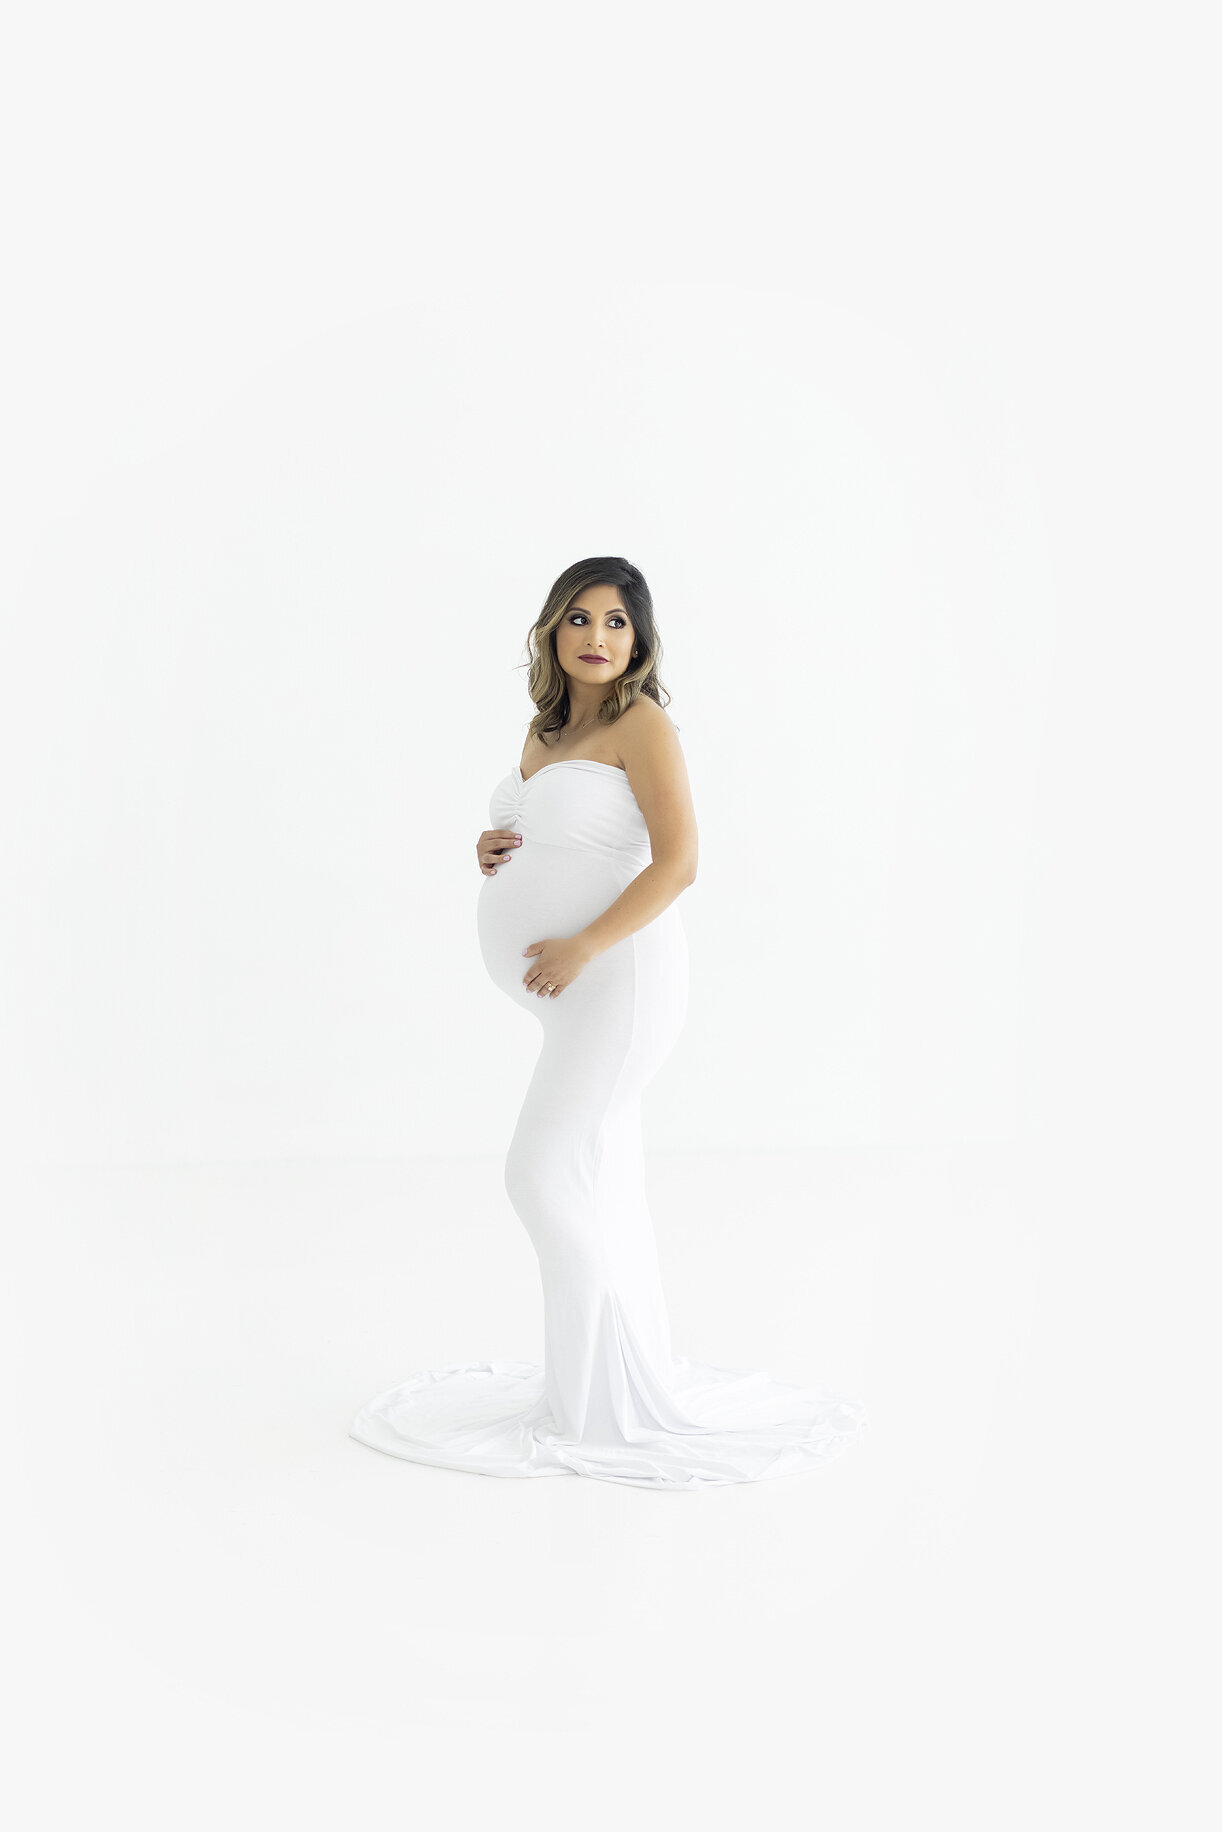 White on White maternity photograph, a Dallas maternity photographer.